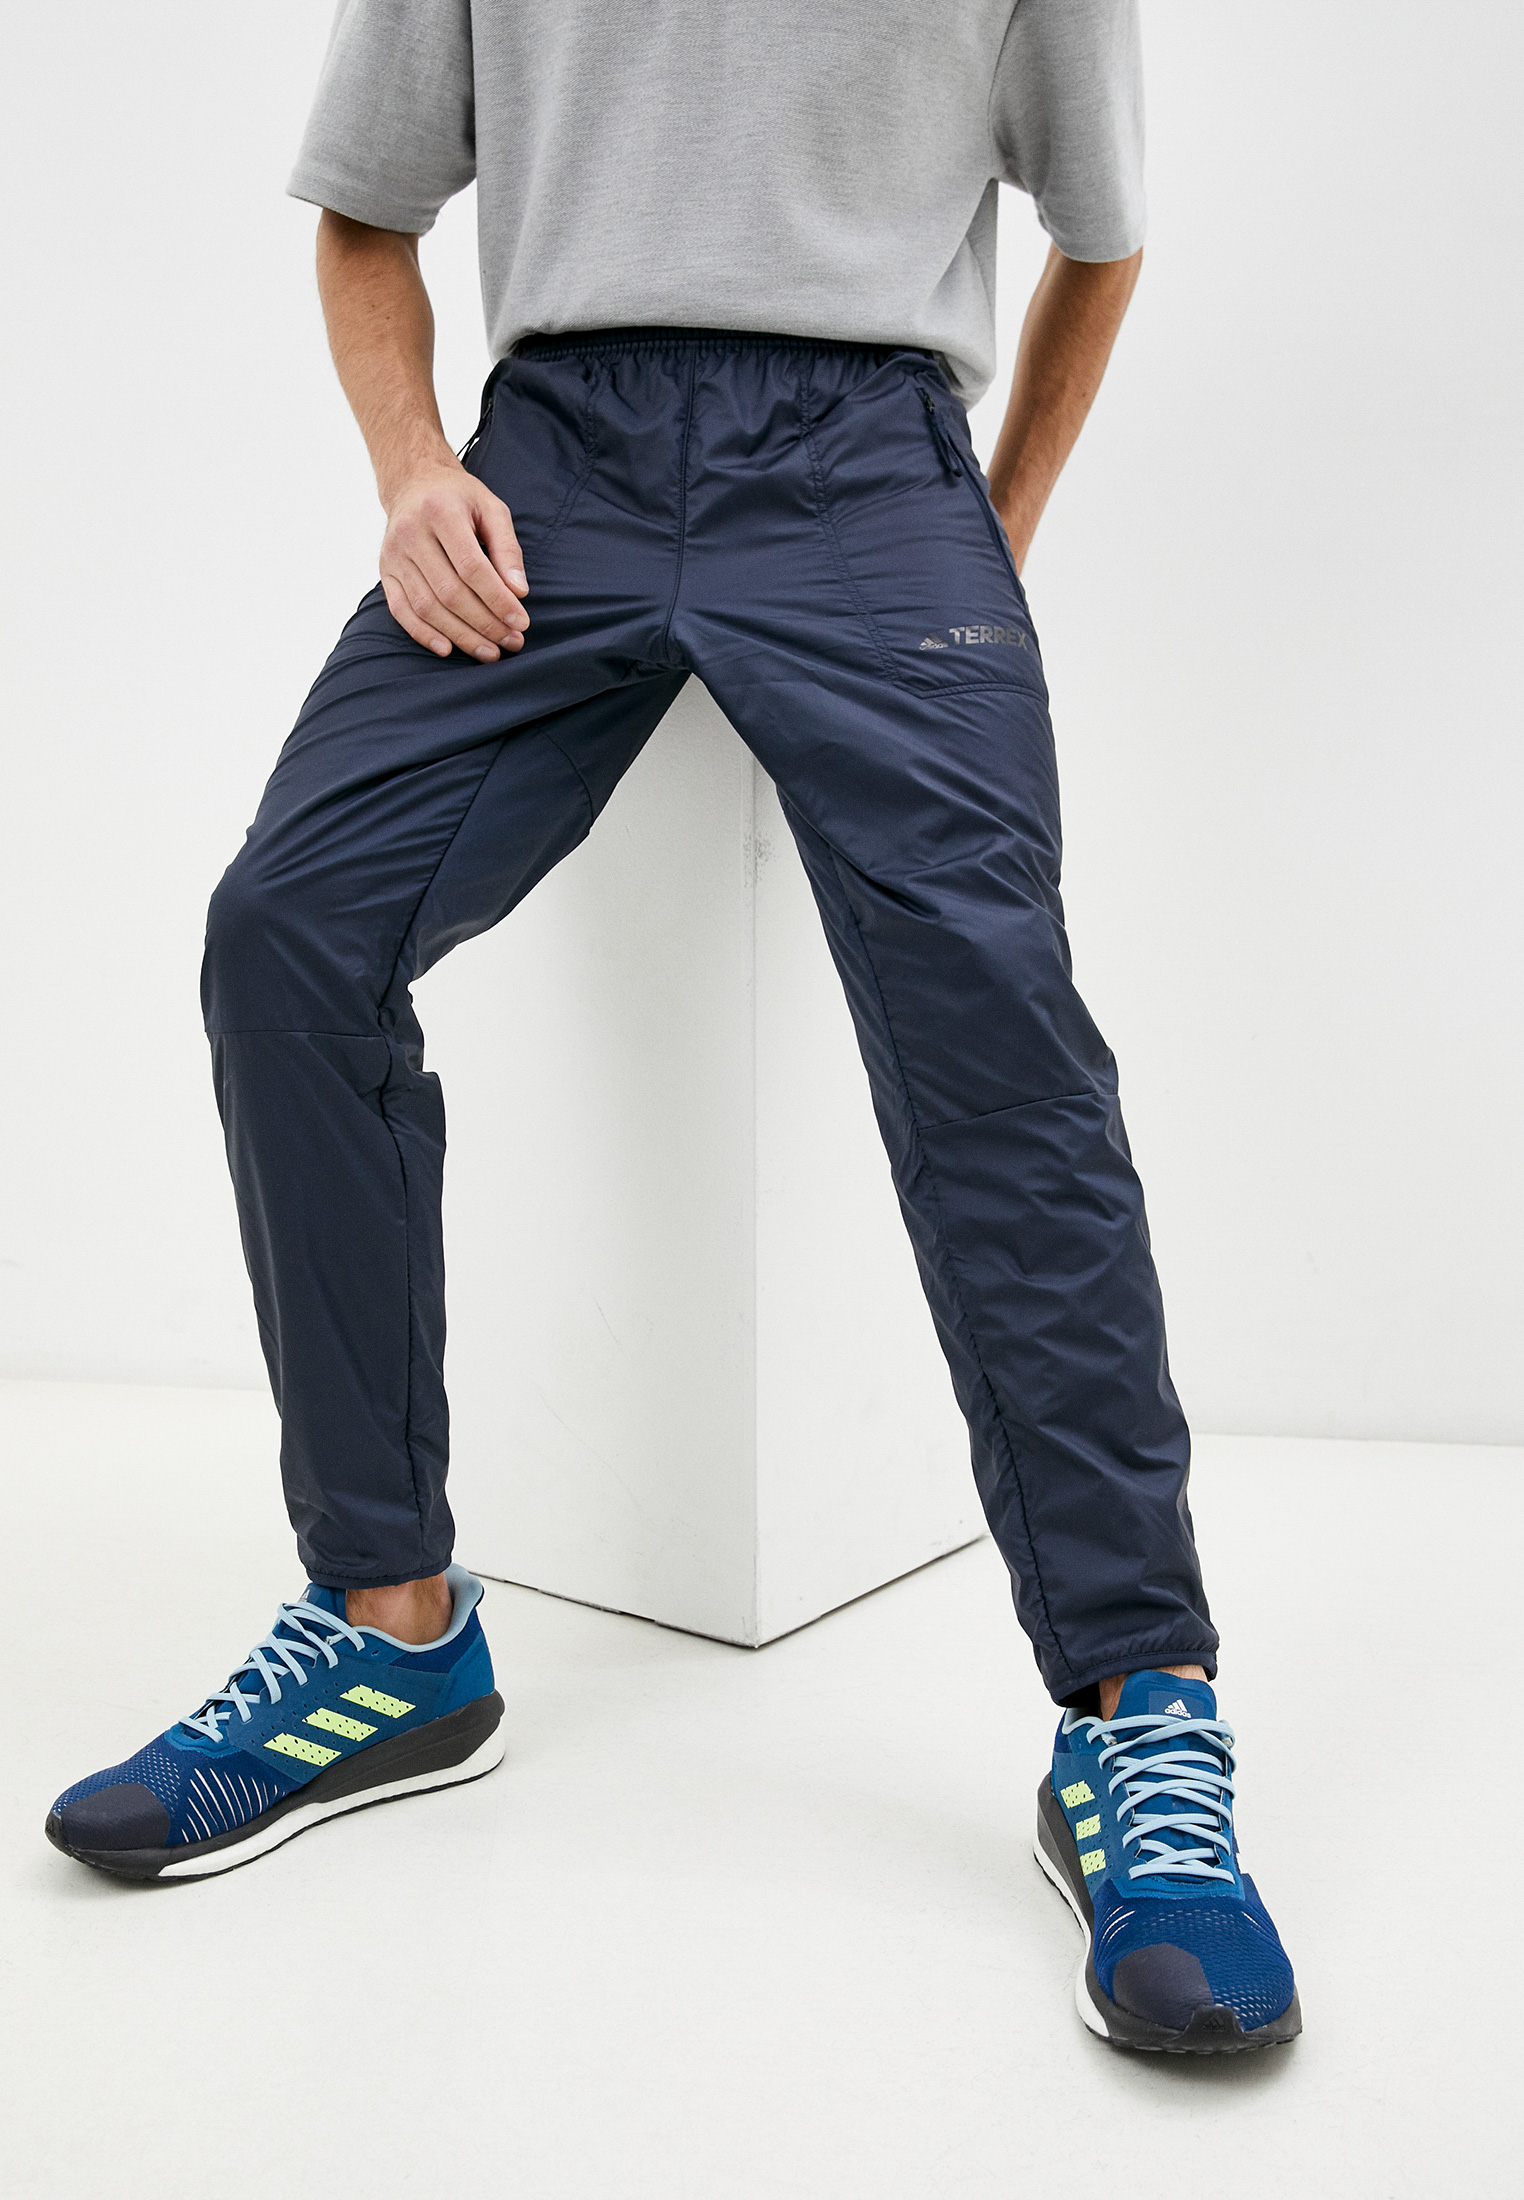 Брюки утепленные adidas MULTI WIND PANT, цвет: синий, RTLAAP955501 — купитьв интернет-магазине Lamoda